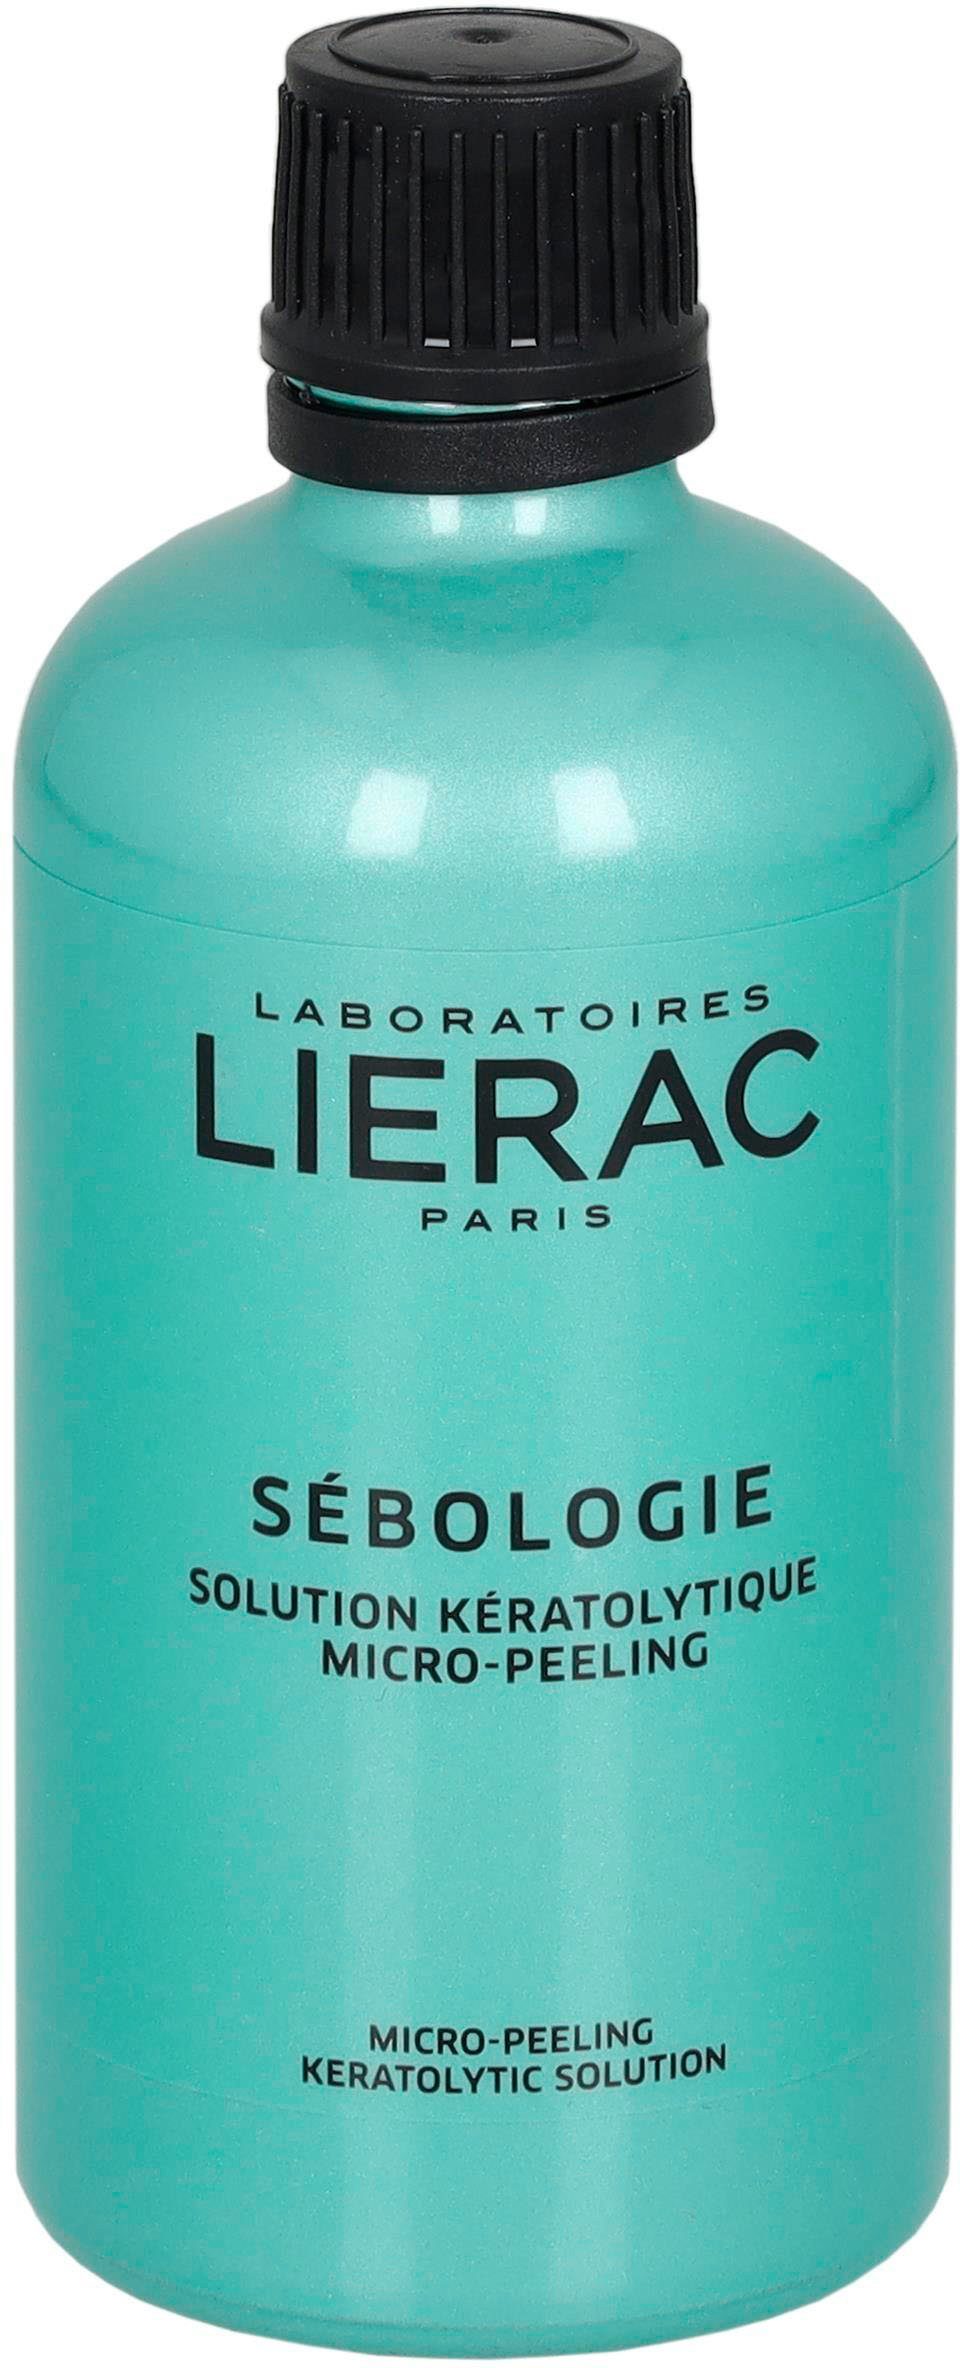 LIERAC Gesichts-Reinigungsfluid Sebologie Micro-Peeling Solution Keratolytique